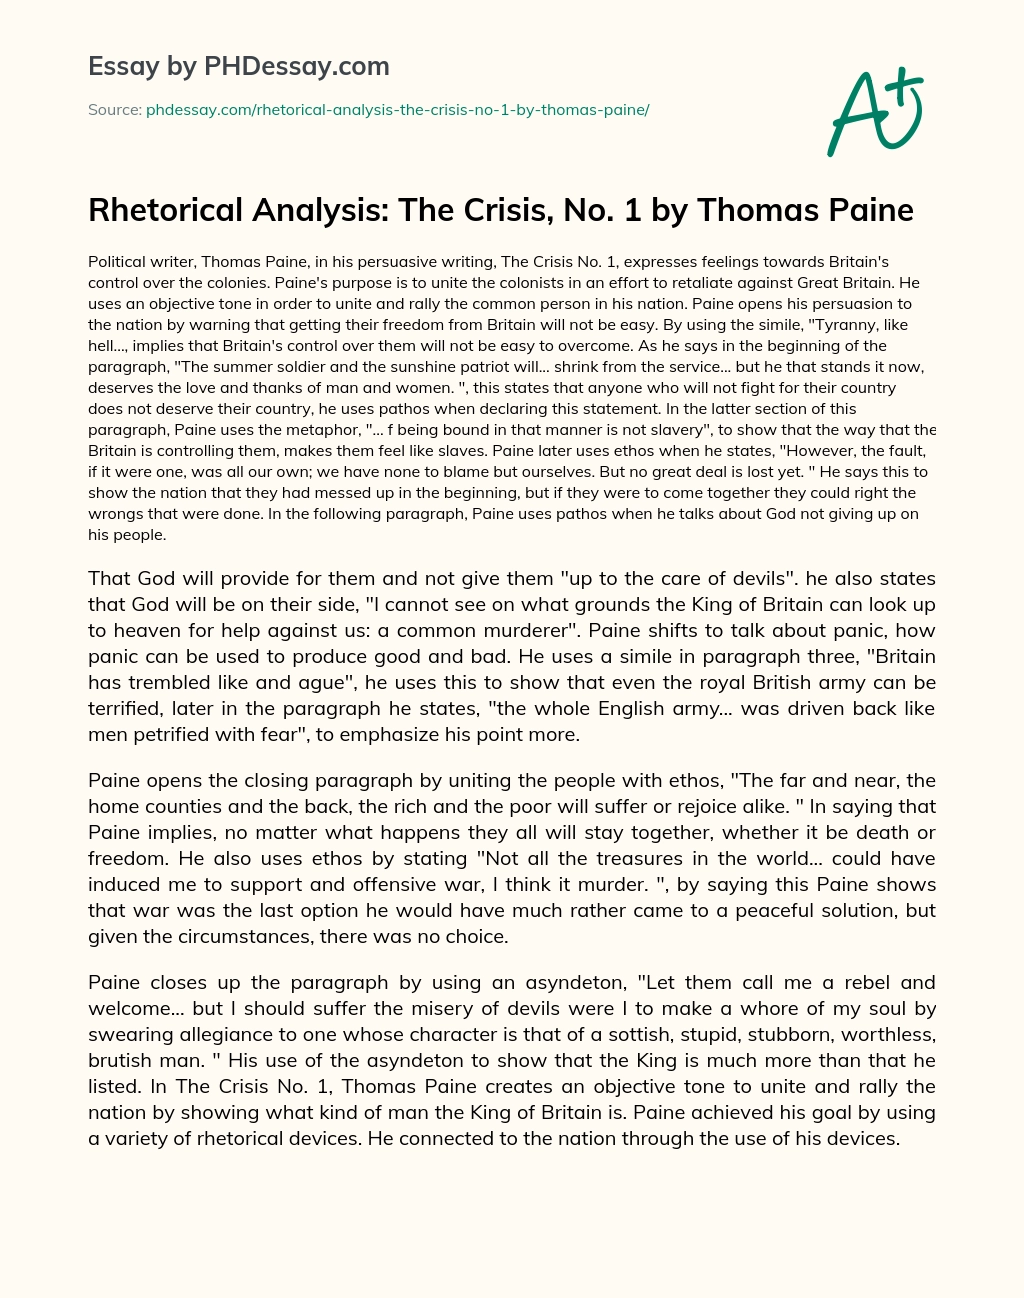 pay for my top rhetorical analysis essay on civil war